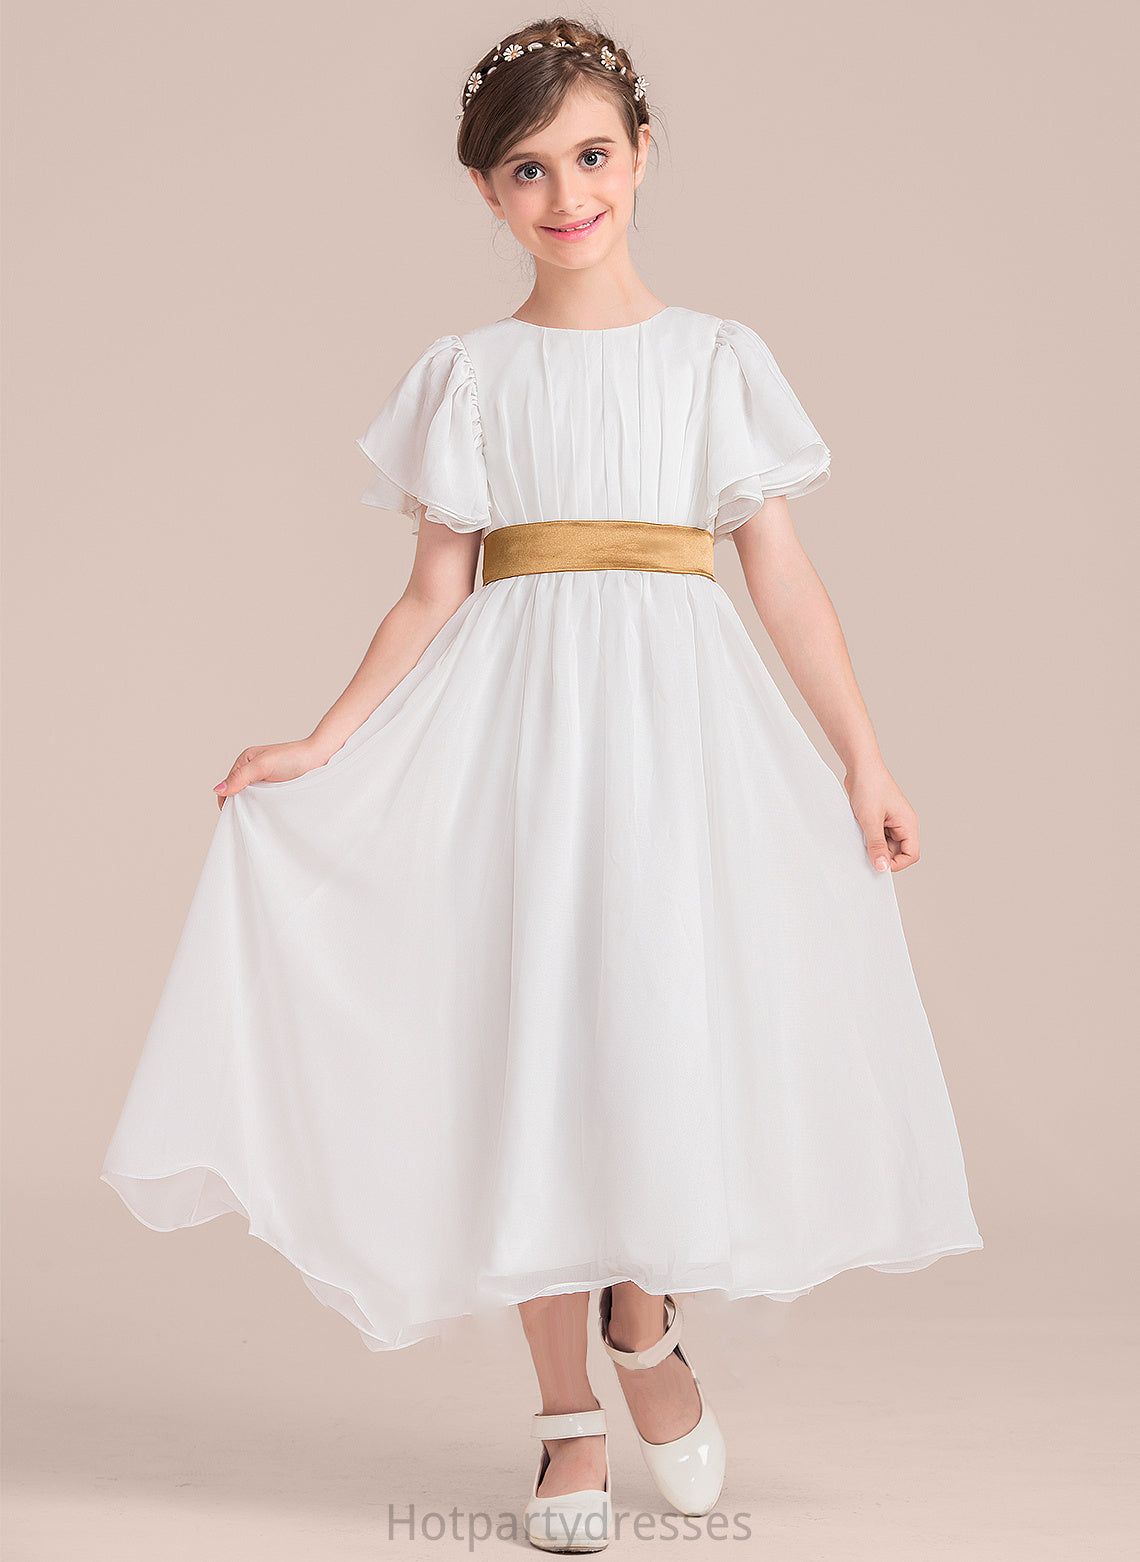 Sash With Junior Bridesmaid Dresses A-Line Ruffle Elva Neck Scoop Tea-Length Chiffon